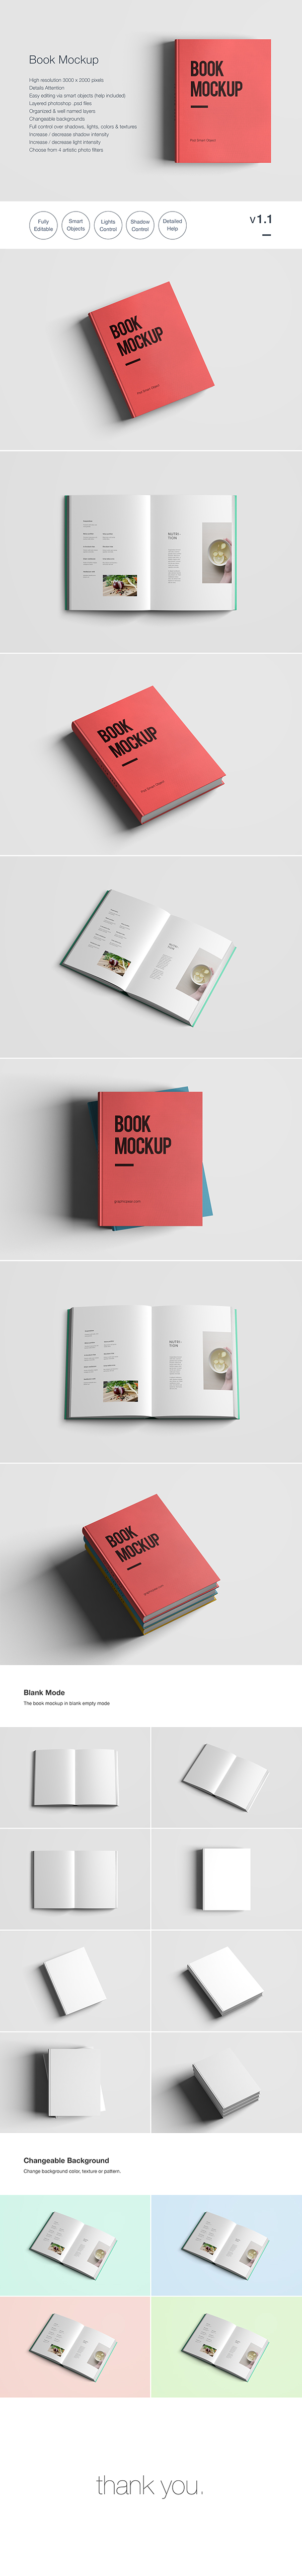 Free Book Mockup - Psd Smart Object